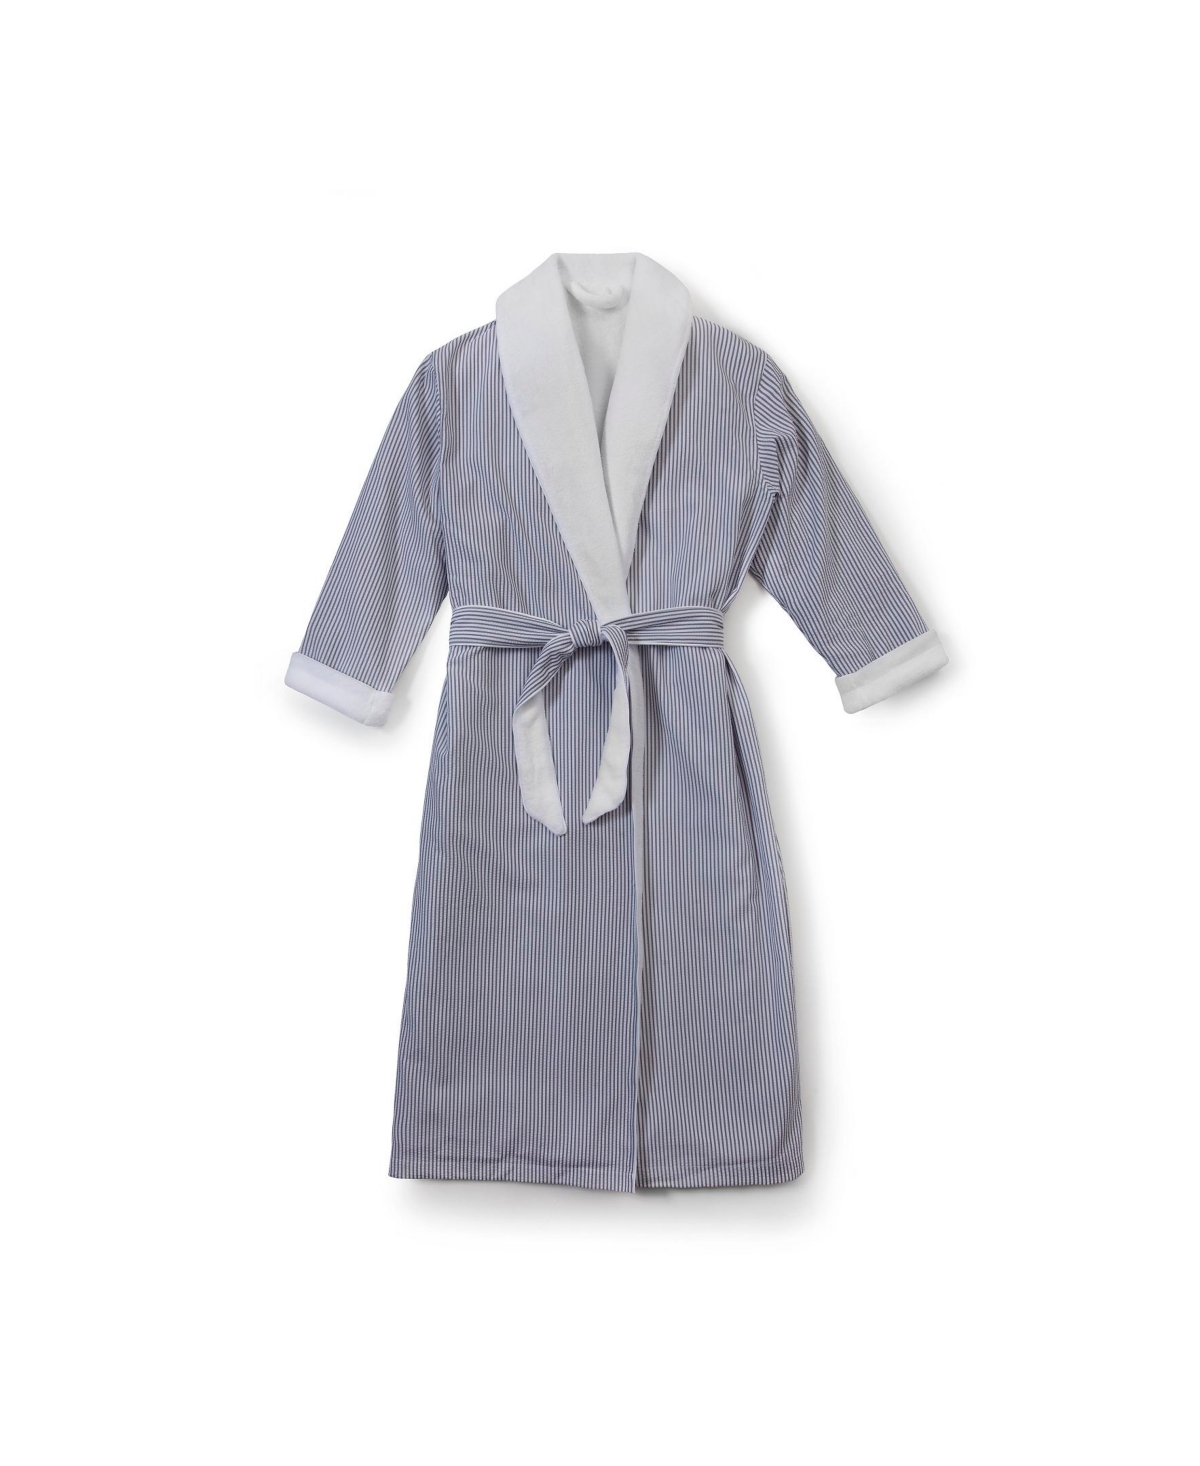 Stria Stripe Fleece and Polyester Bath Robe - White, Gray